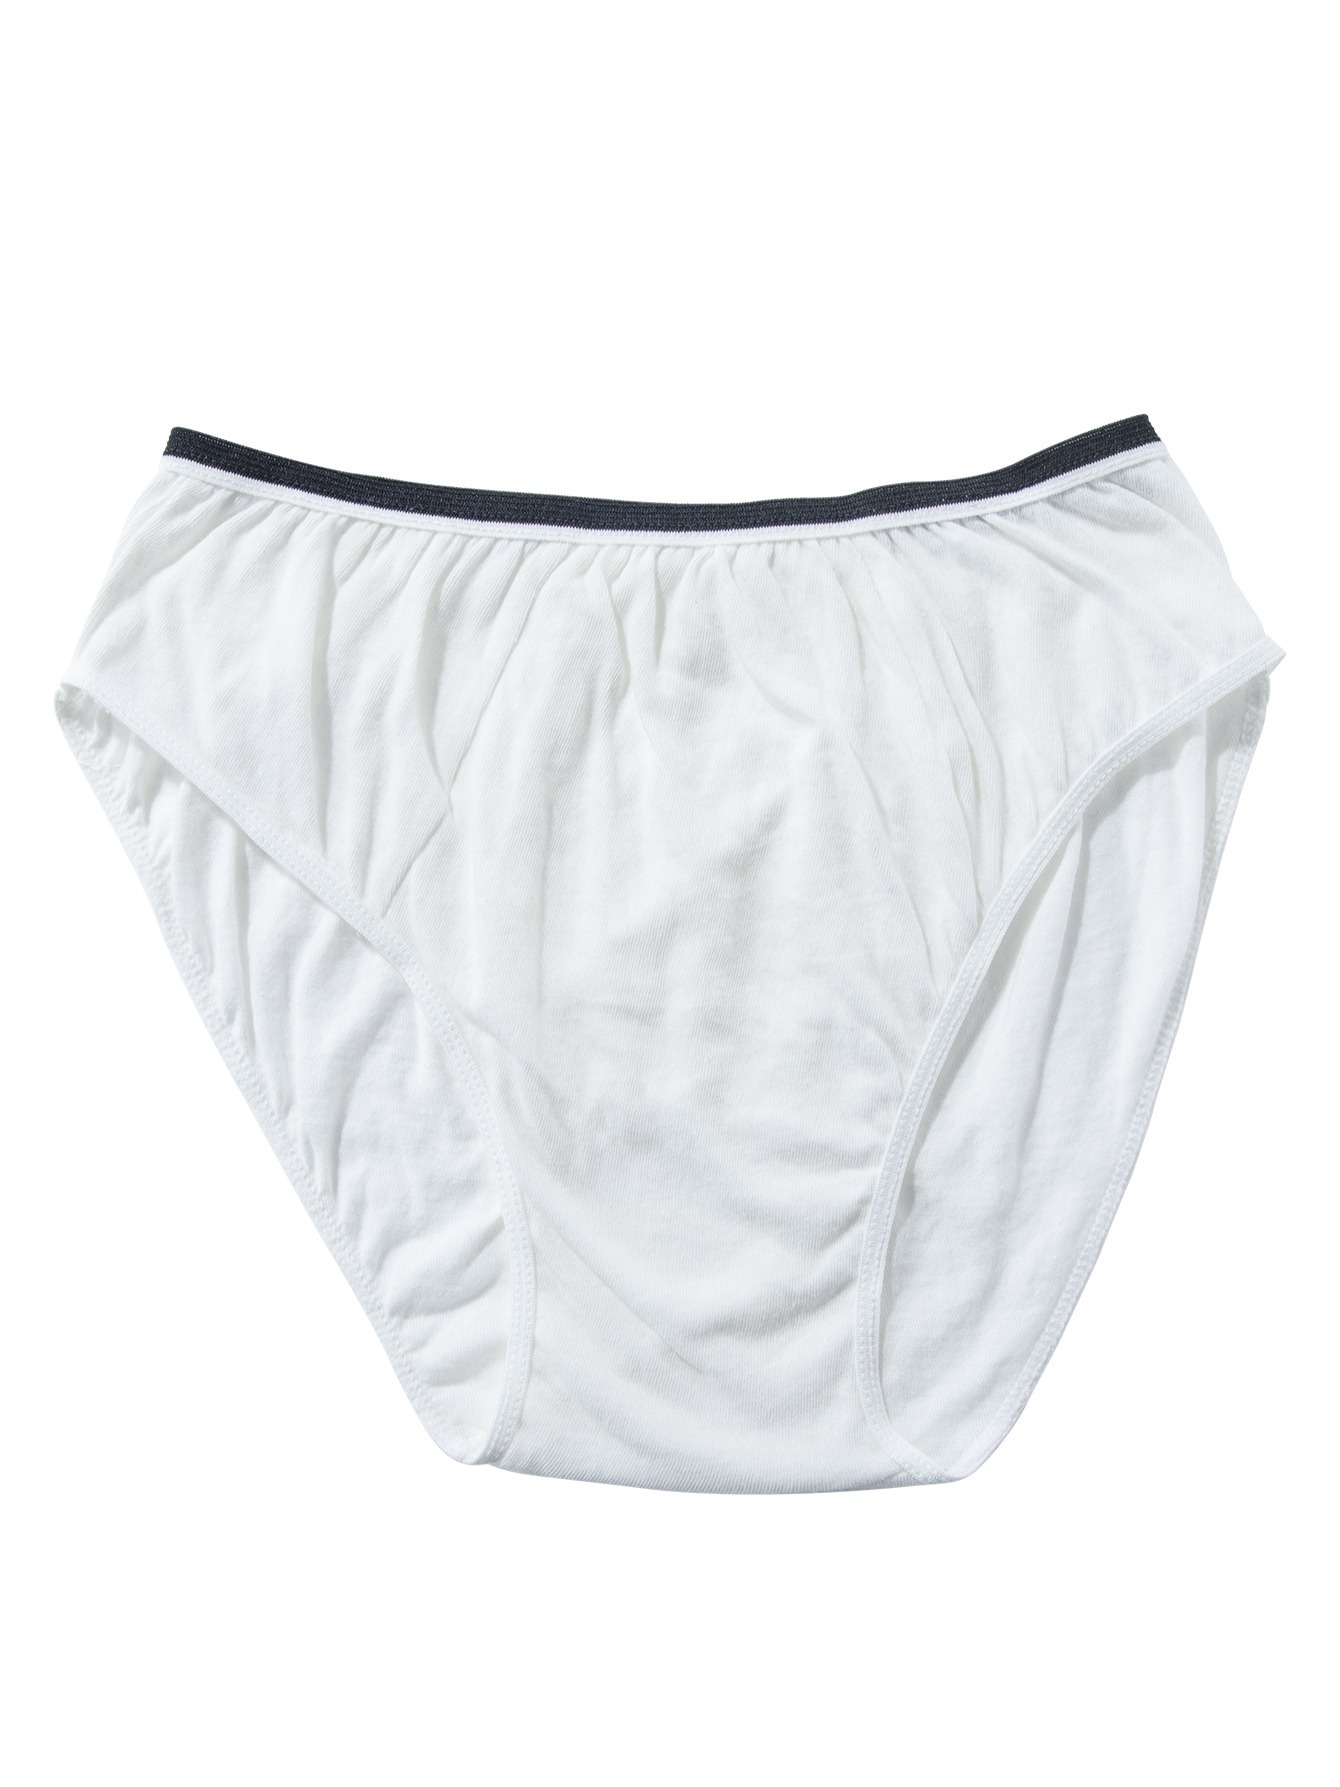 5 Pieces Disposable Men Lingerie Briefs Single Use Cotton Panties Underwear  For Modern Life - Briefs - AliExpress